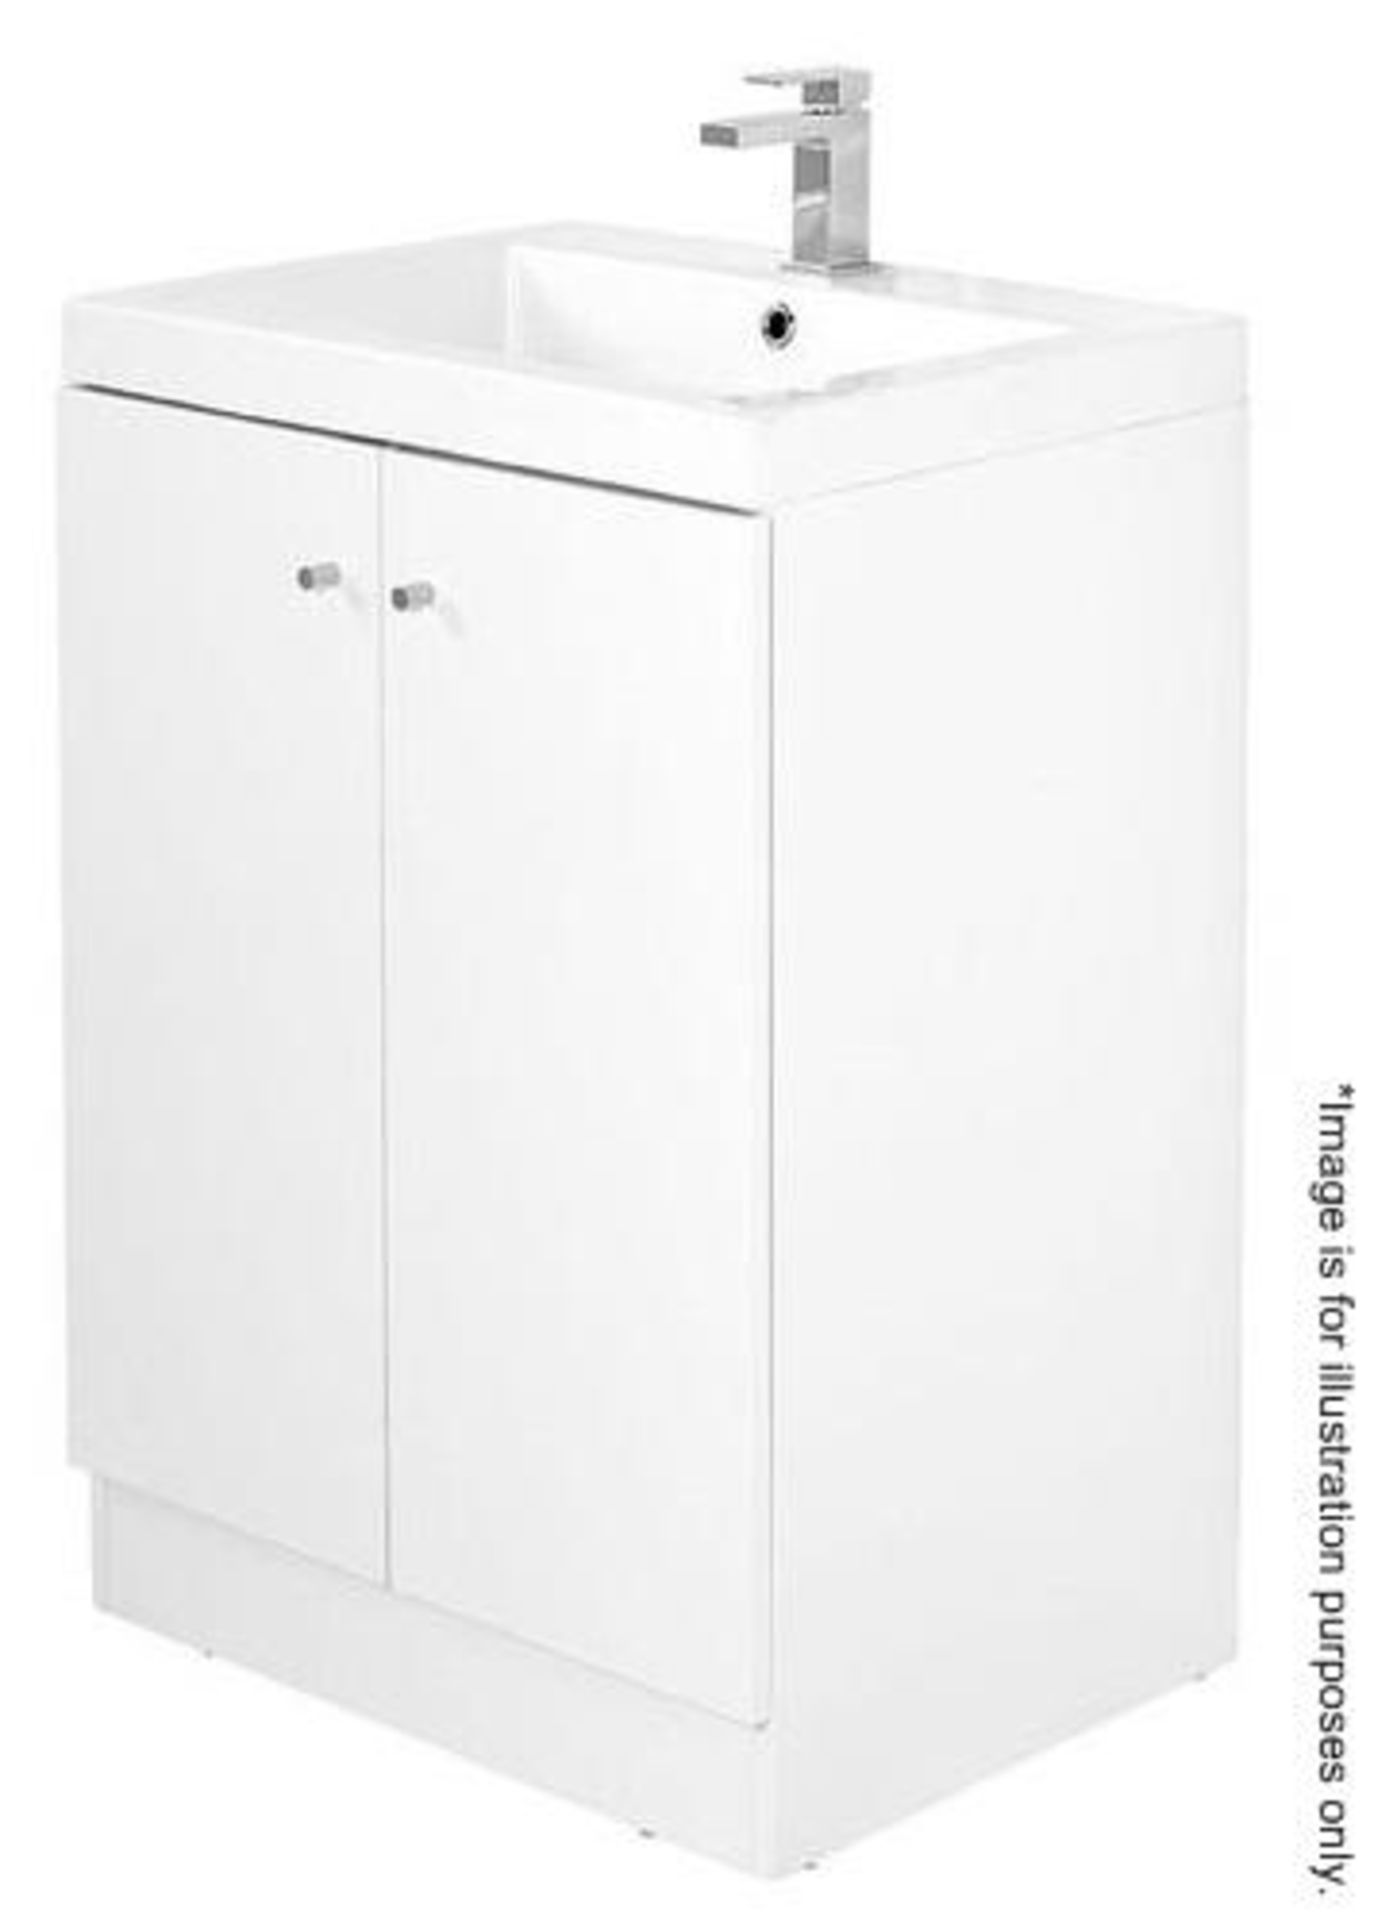 10 x Alpine Duo 600 Floorstanding Vanity Units In Gloss White - Dimensions: H80 x W60 x D45cm - Bran - Image 2 of 5